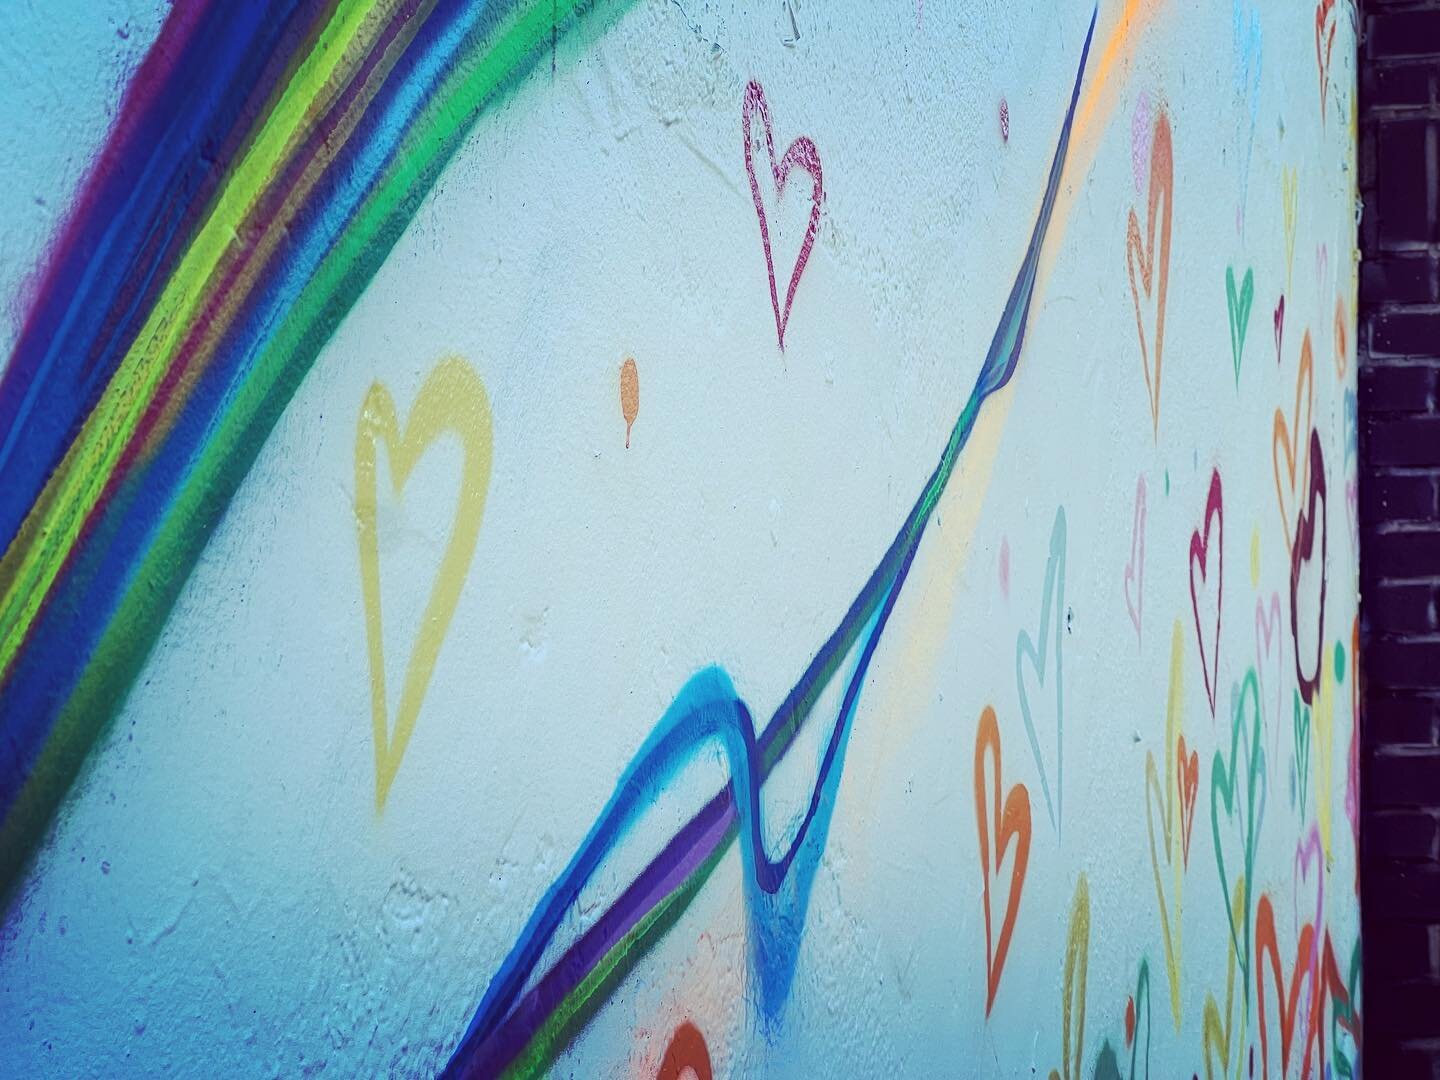 Another piece of the goodness!
Heaps of thanks @burntbyabnr 

#heydaysalonpdx #heydaysalon #portlandhairstylist #portlandstreetart #streetart #lovespray #portlandart #pnw #pdx #portlandtattoo #portlandsalons